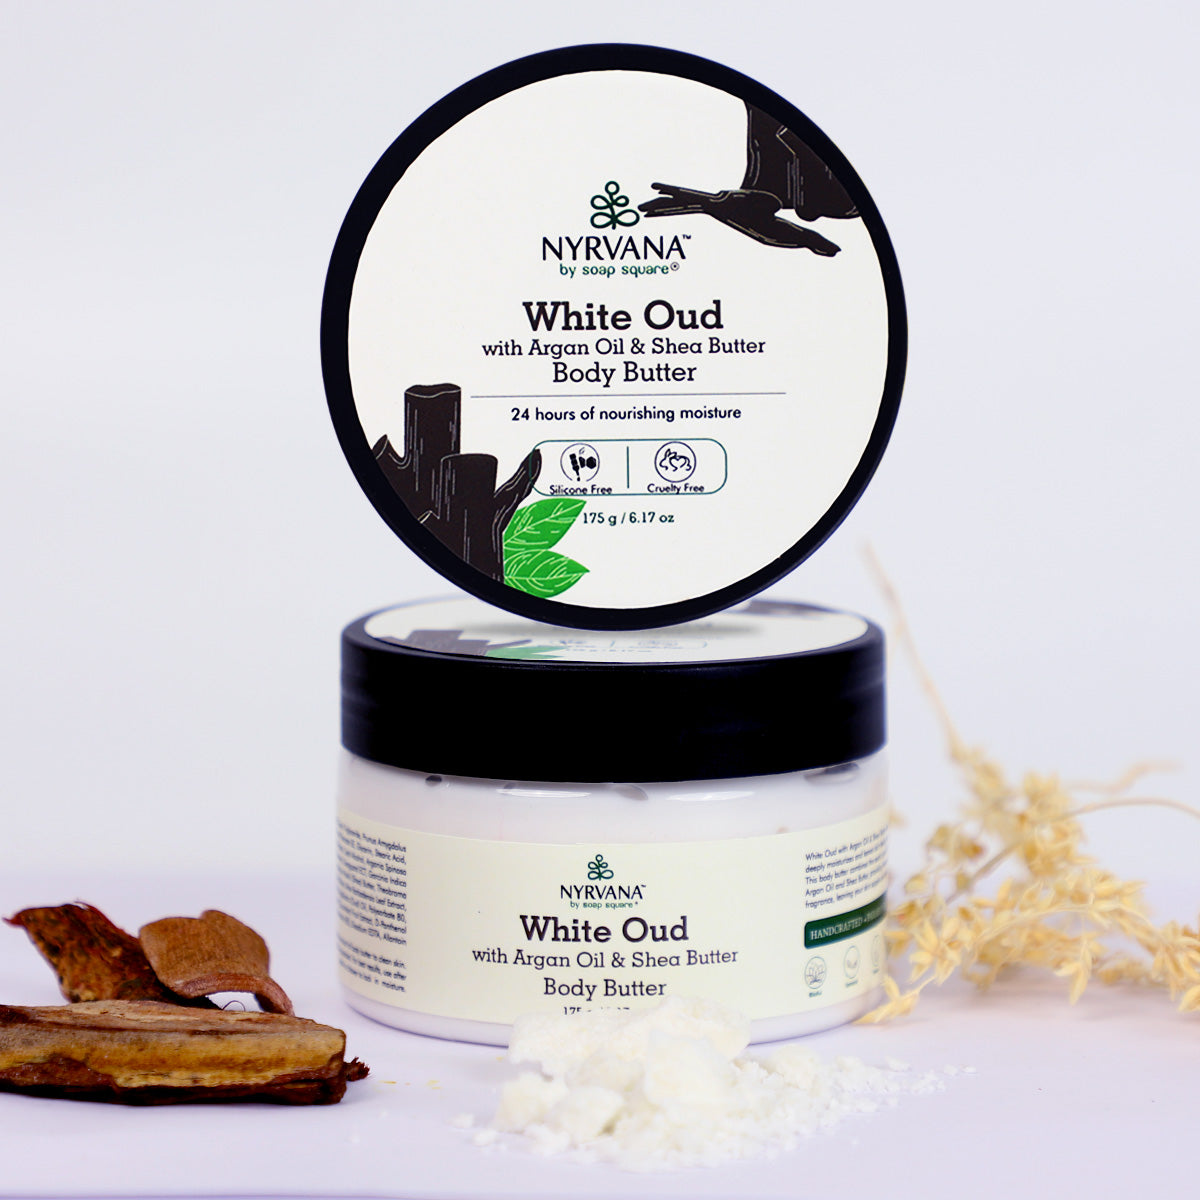 White Oud with Argan Oil & Shea Butter Body Butter